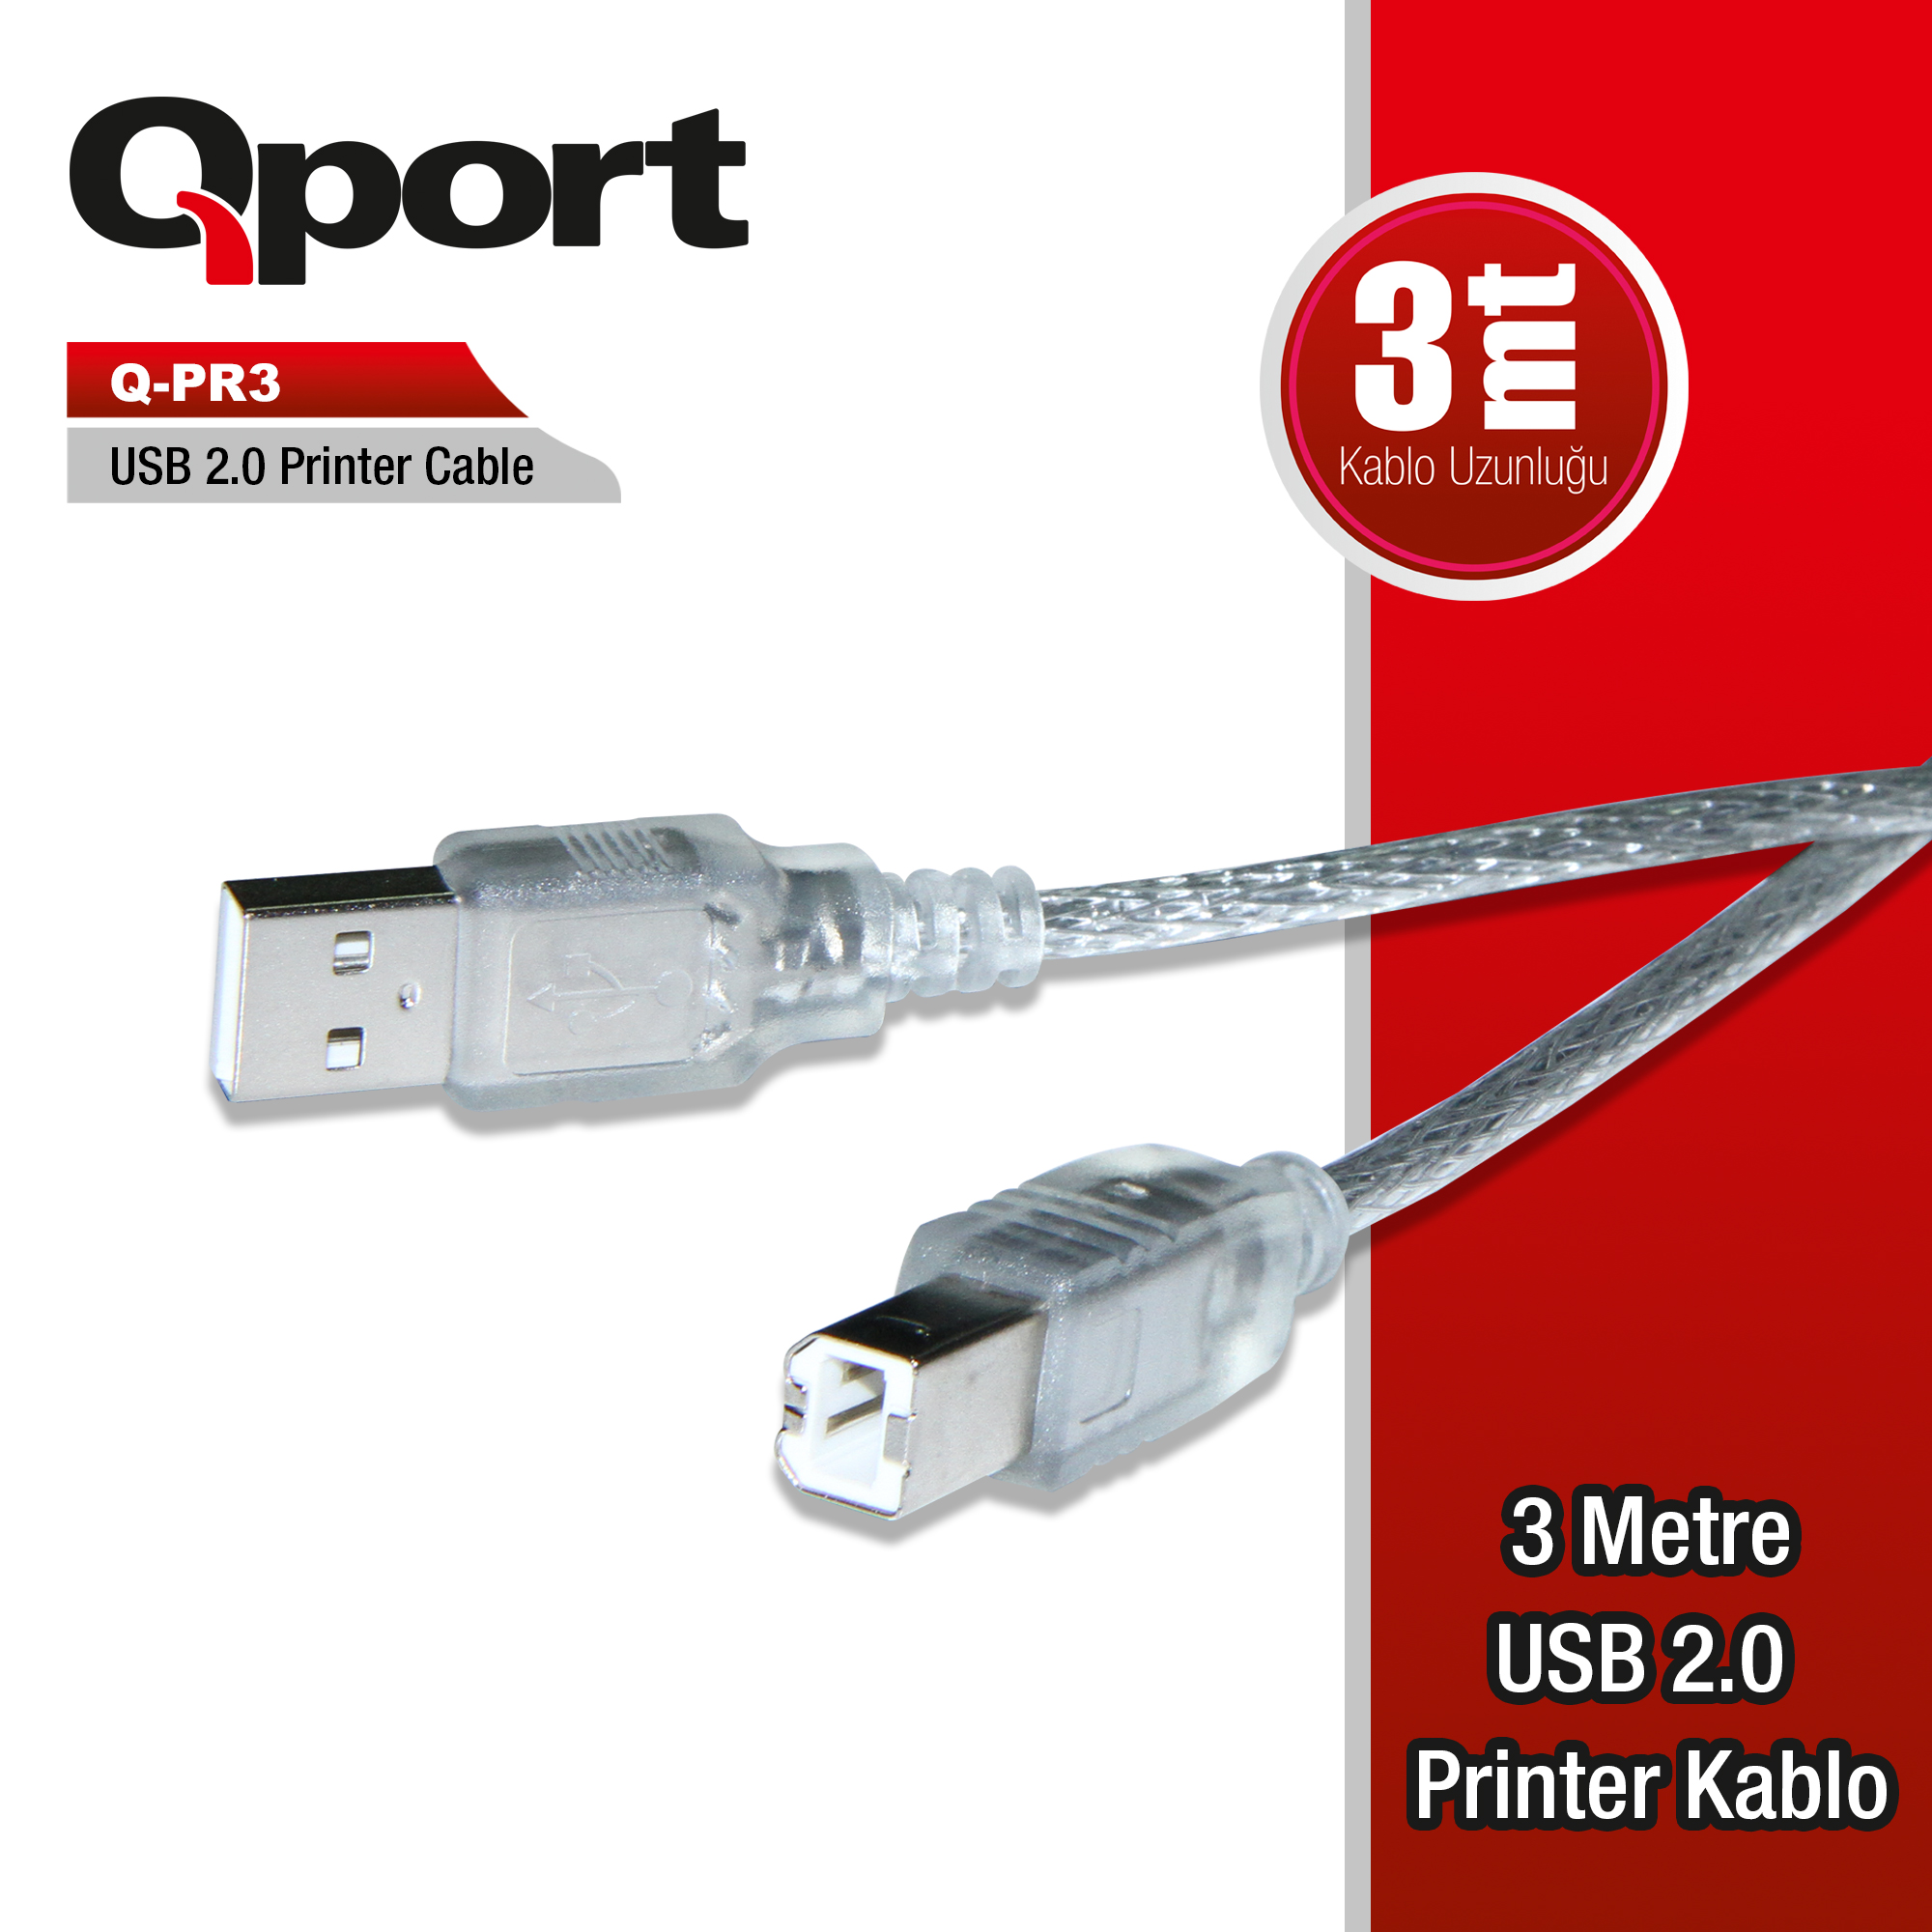 QPORT USB2.0 3M YAZICI KABLOSU (Q-PR3)